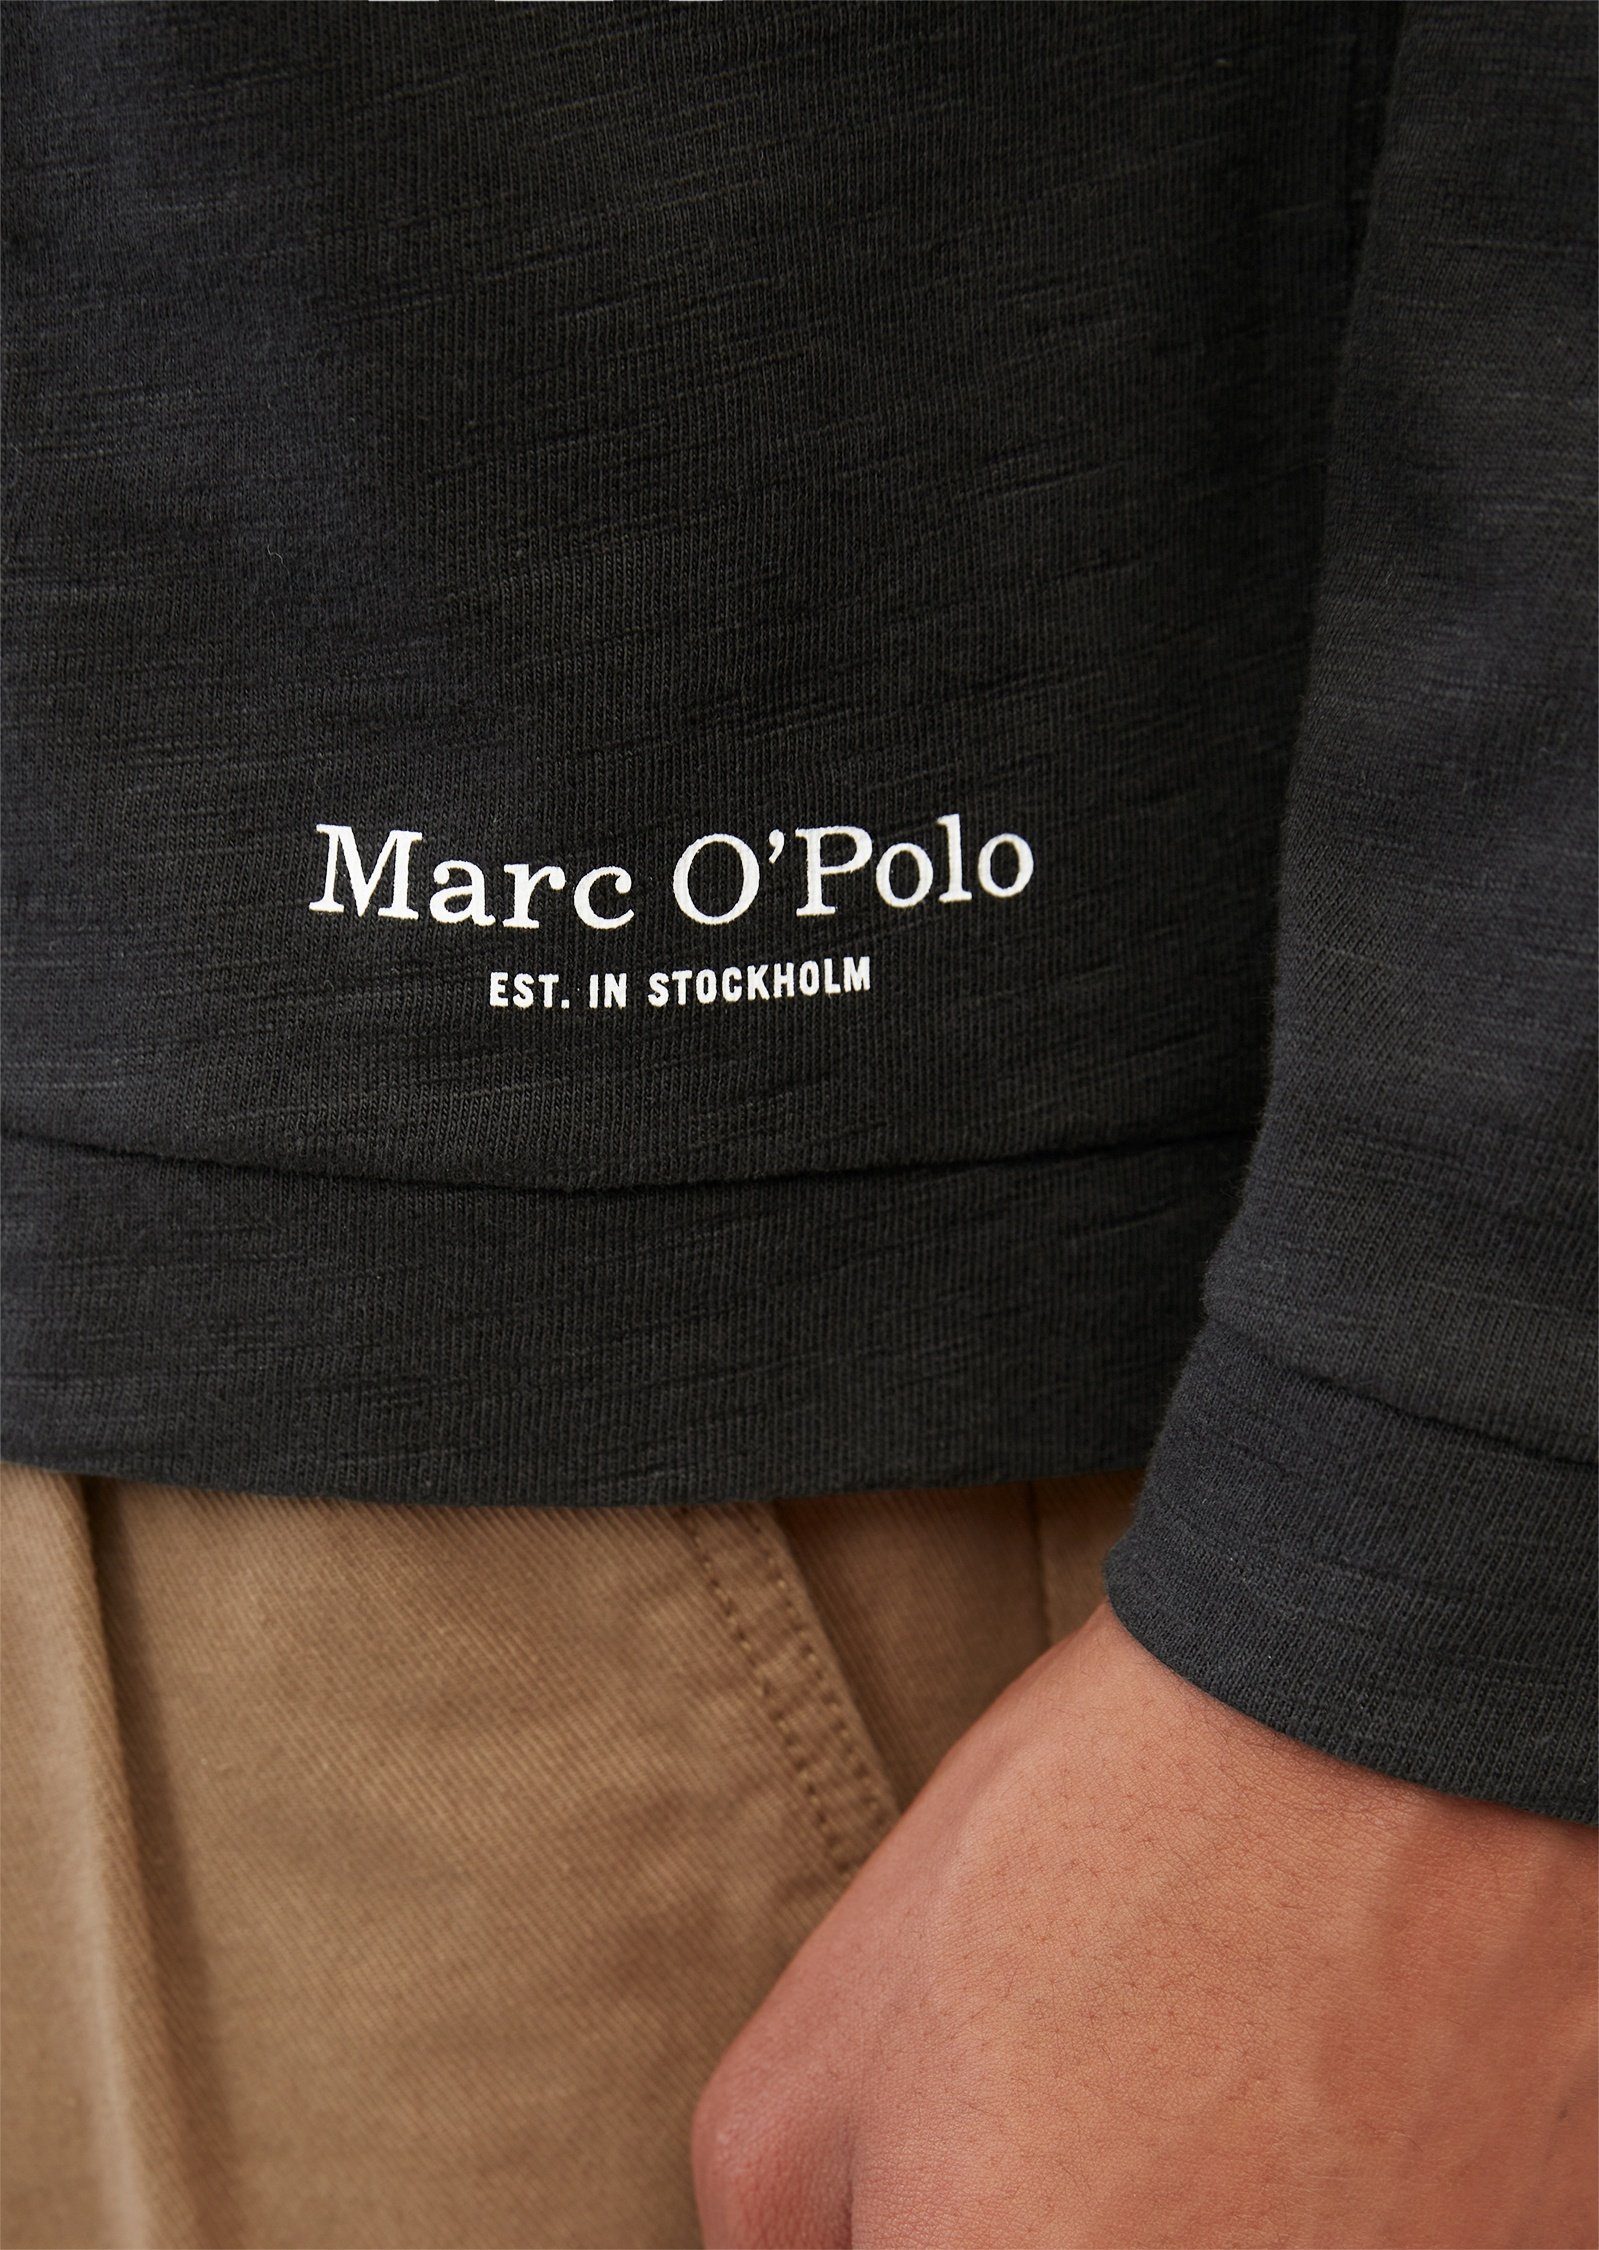 Bio-Baumwolle schwarz aus O'Polo Langarmshirt reiner Marc